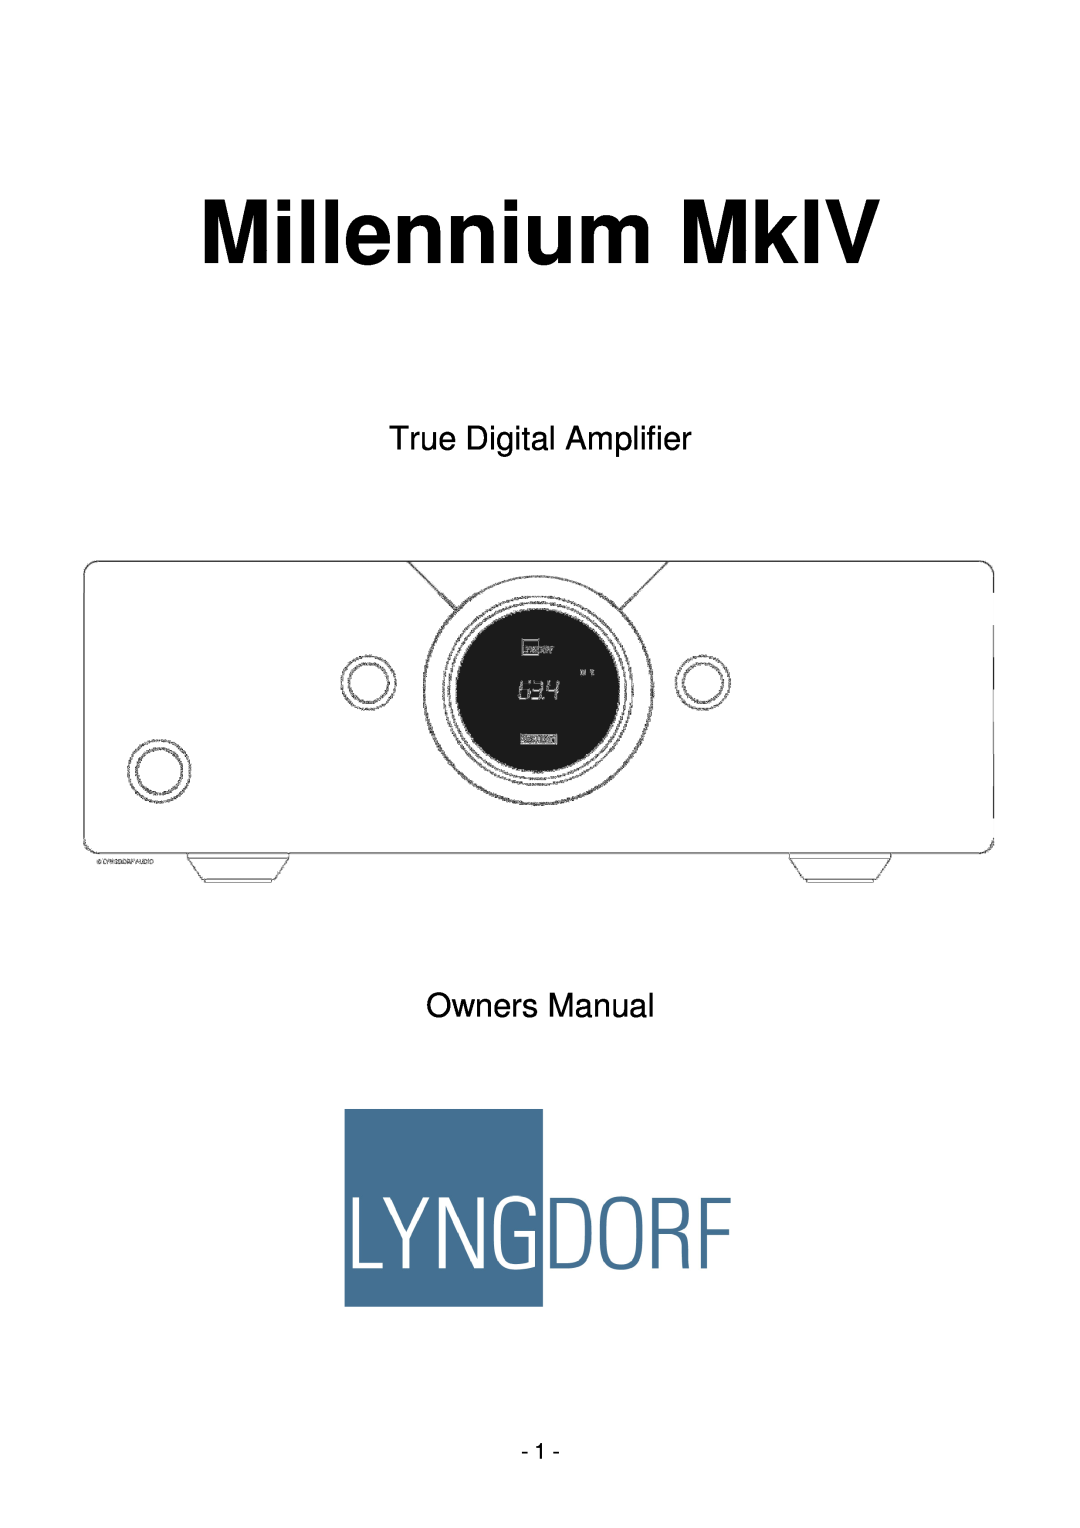 Lyngdorf Audio owner manual Millennium MkIV 